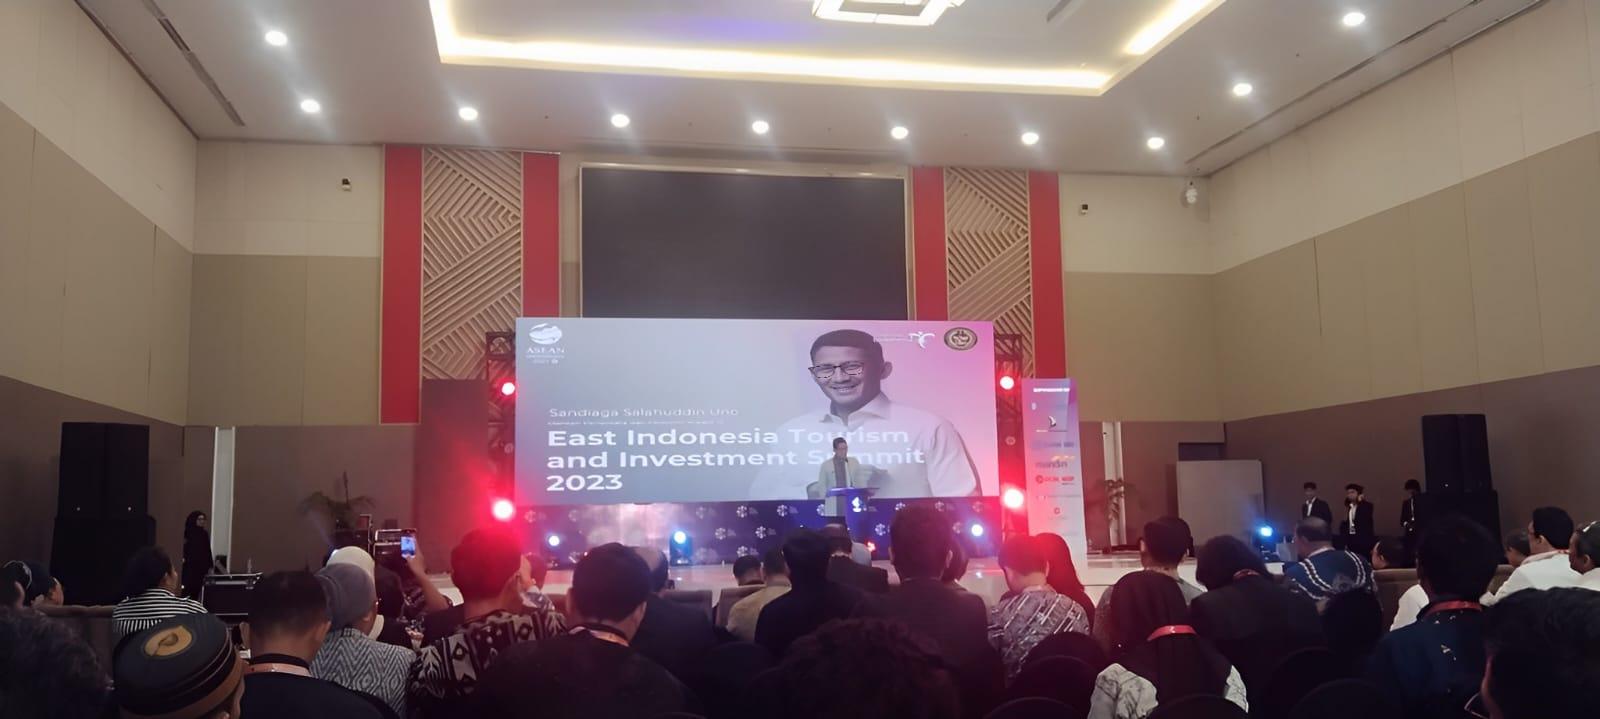 Menparekraf Sandiaga Uno pada pertemuan “East Indonesia Tourism and Investment Summit 2023” di Hotel Claro Makassar, Jumat, 3 Maret 2023.